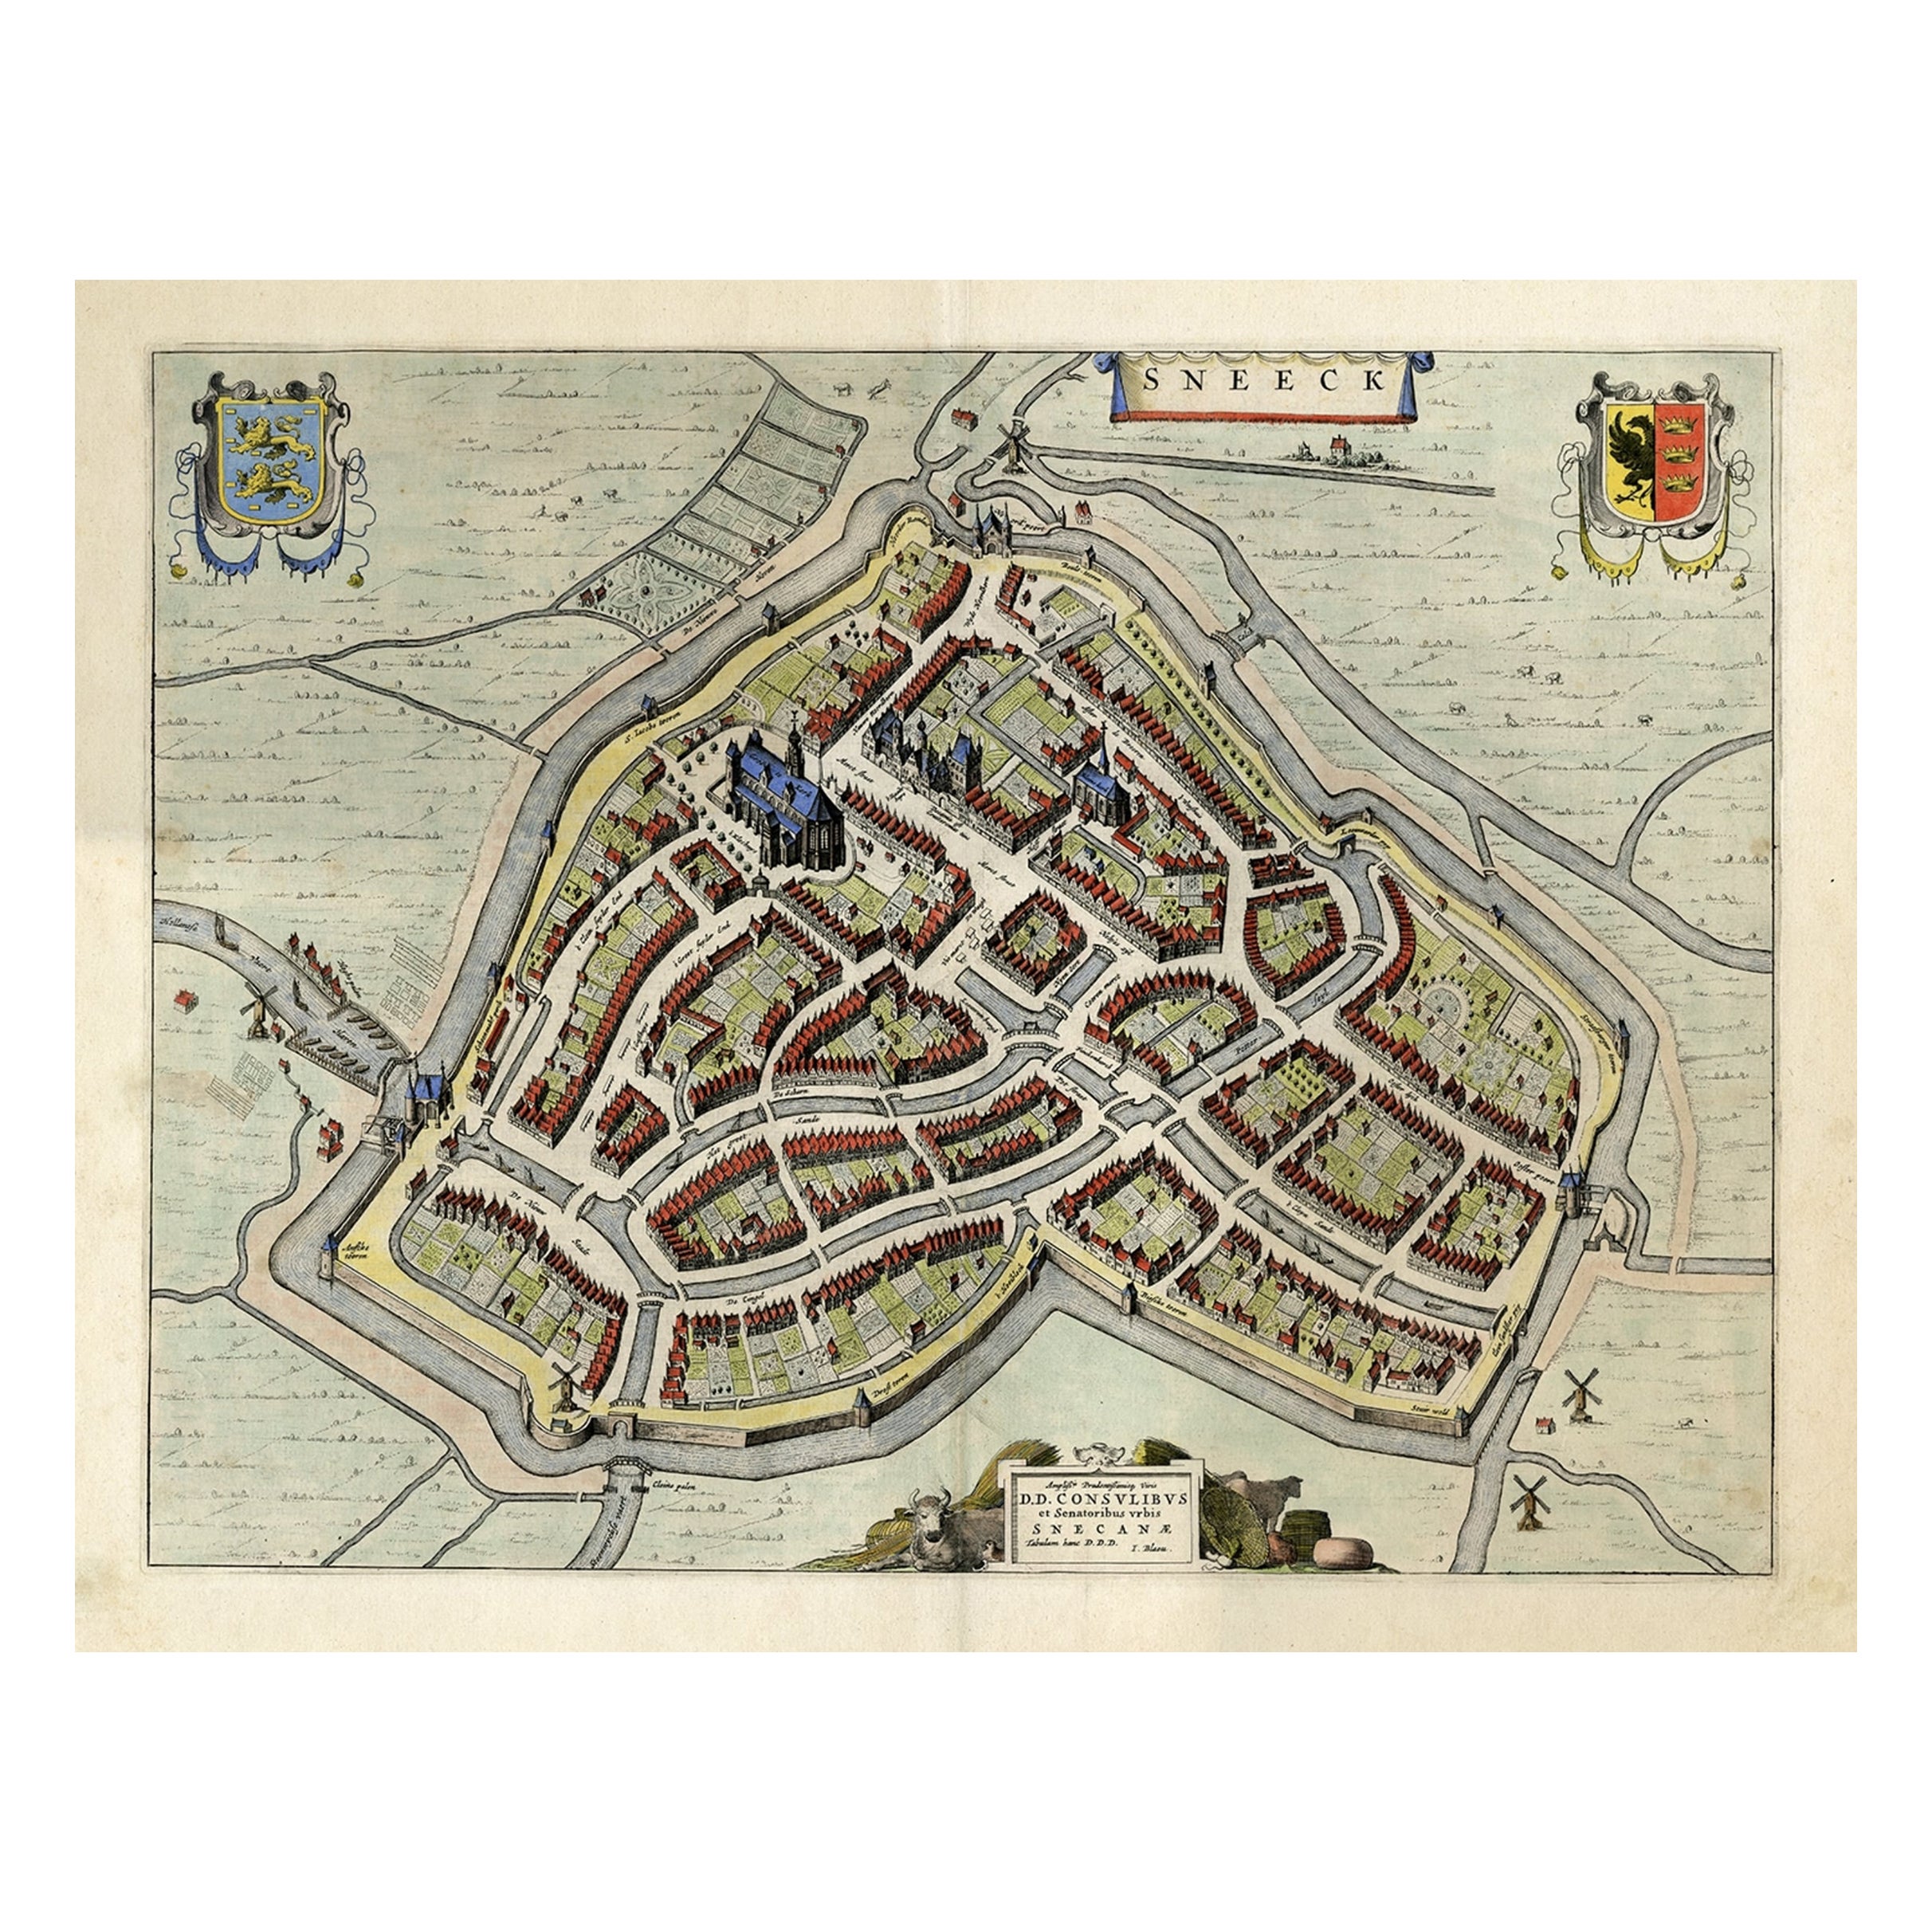 Original Old Bird's-eye View plan of Sneek, Friesland, The Netherlands, 1649